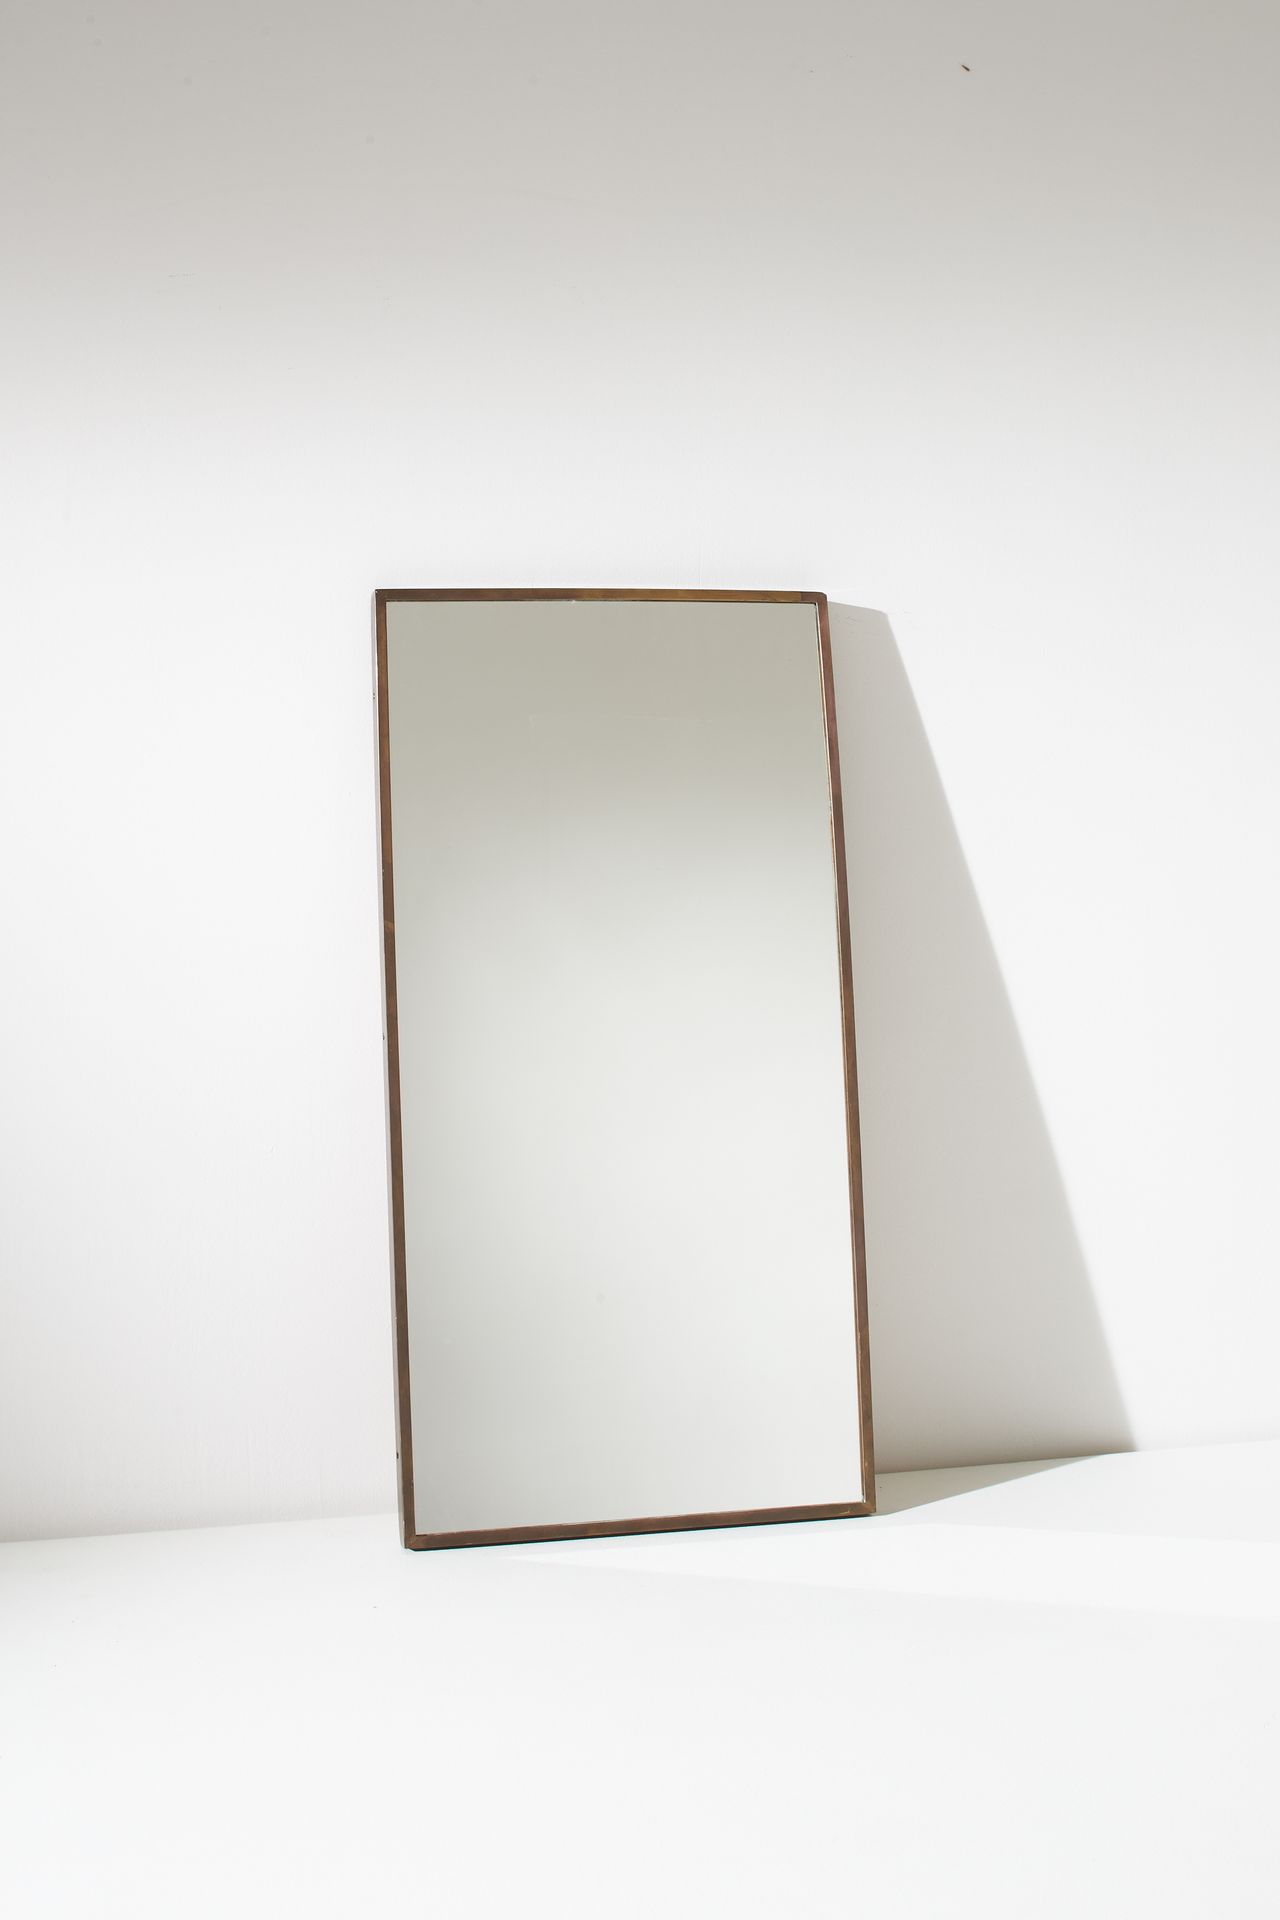 MANIFATTURA ITALIANA Mirror. Brass, mirrored crystal. Italy 1950s. 
81x 41 cm.
A&hellip;